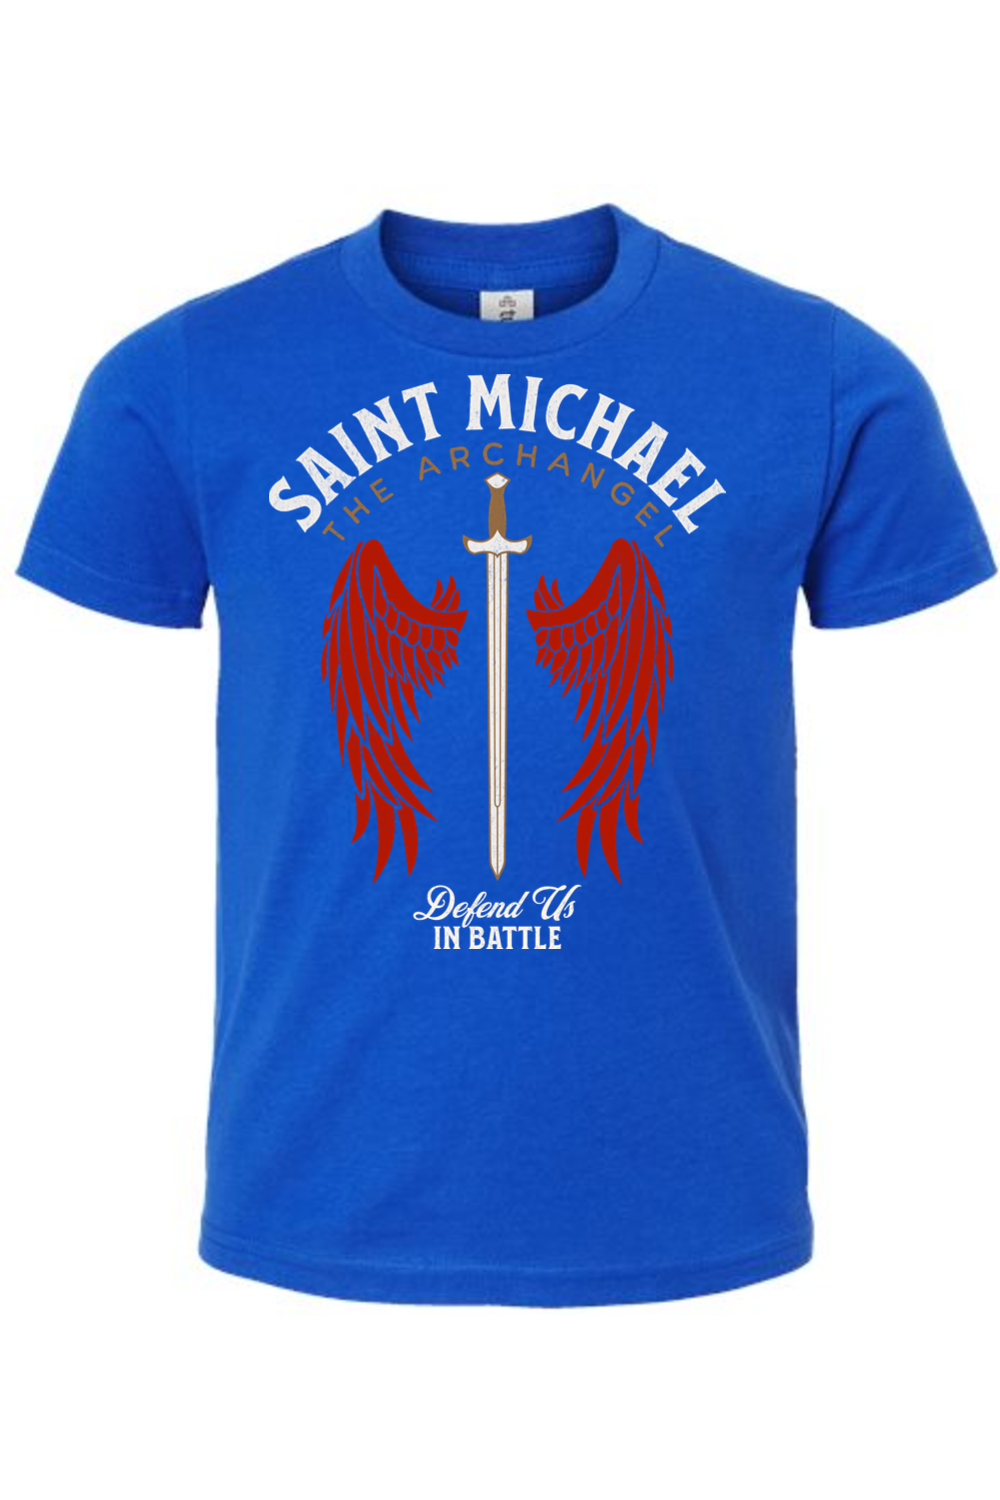 St. Michael - Defend Us in Battle Kids T-Shirt